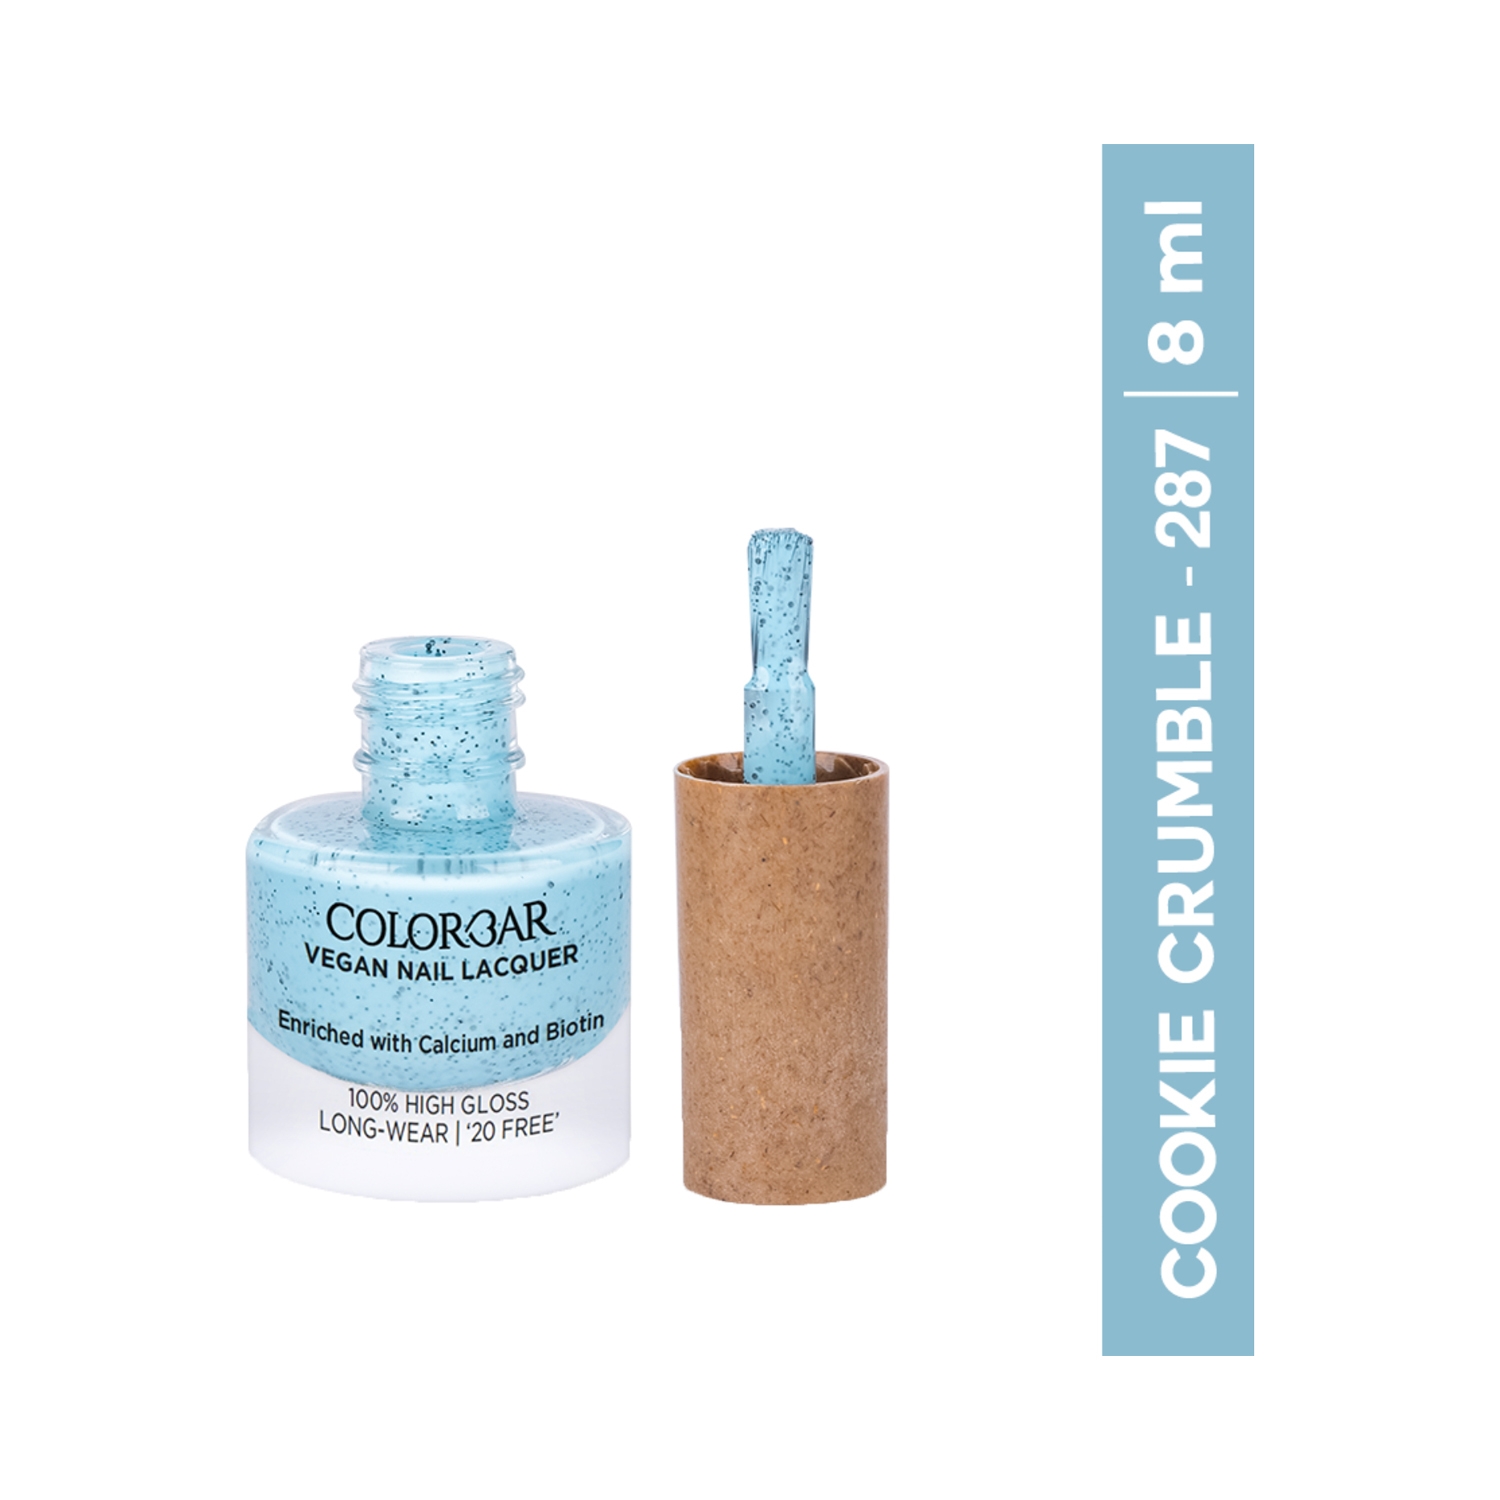 Colorbar | Colorbar Vegan Nail Lacquer - 287 Cookie Crumble (8 ml)